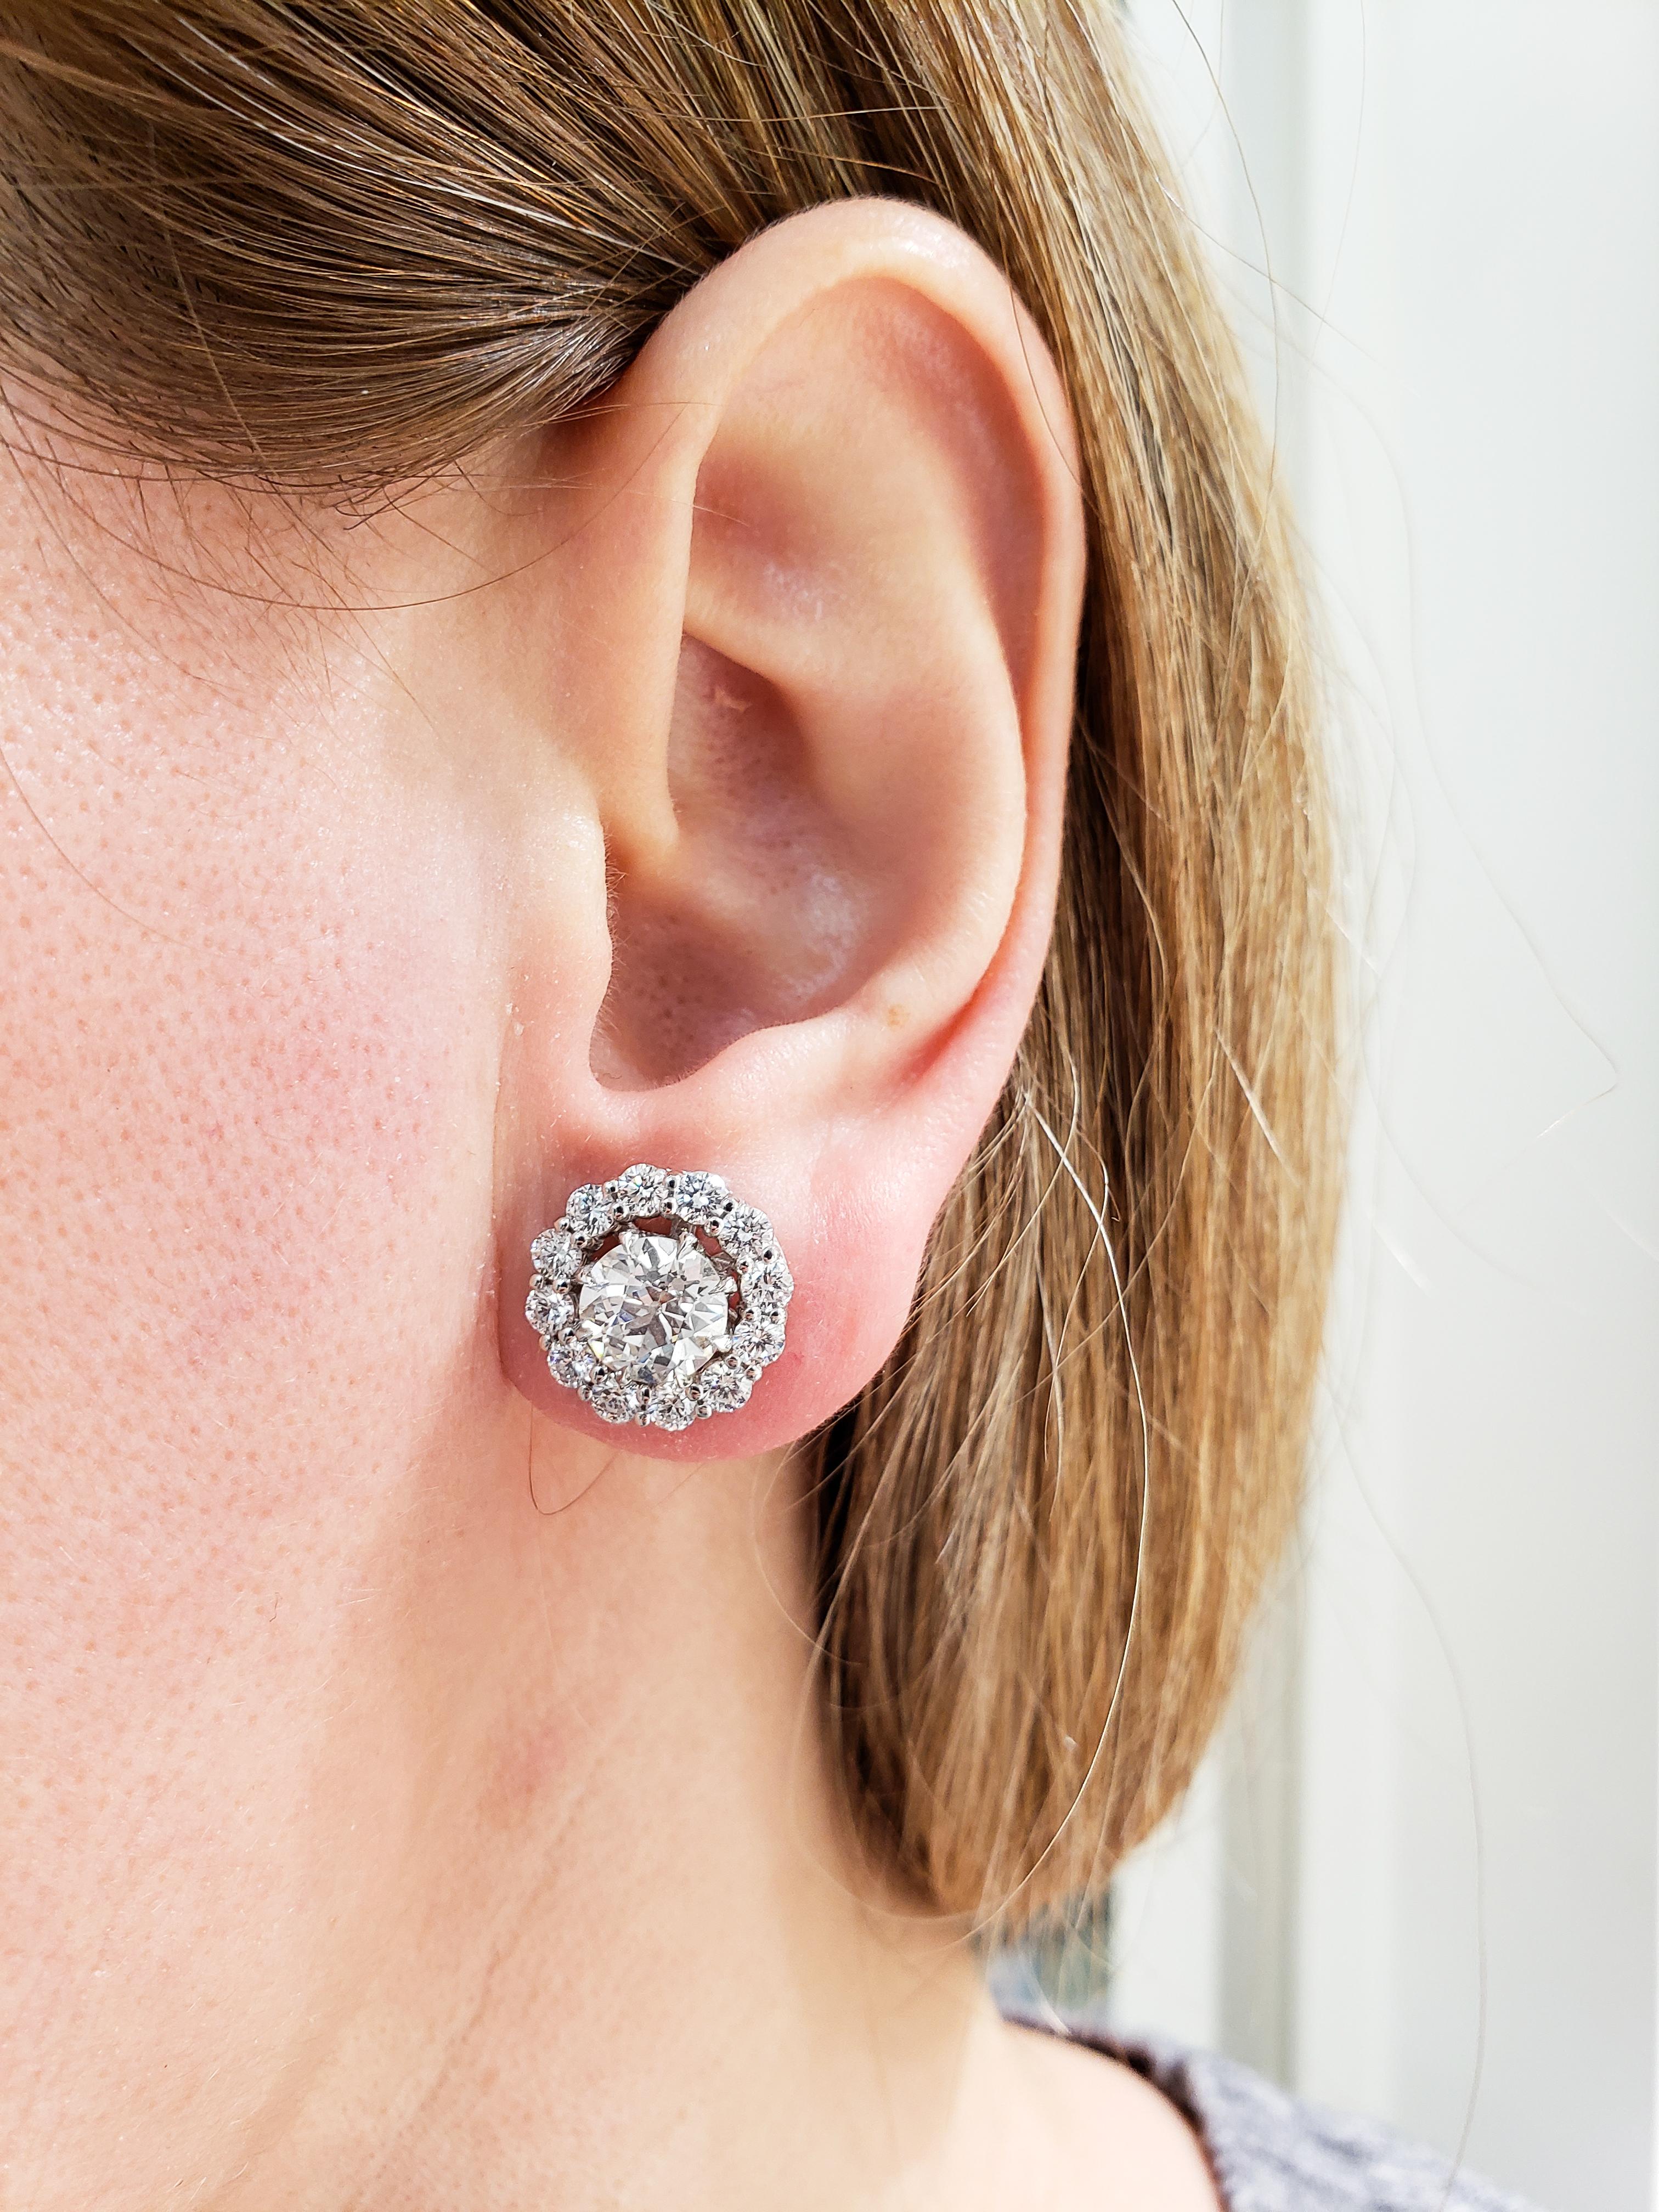 50 carat diamond earrings